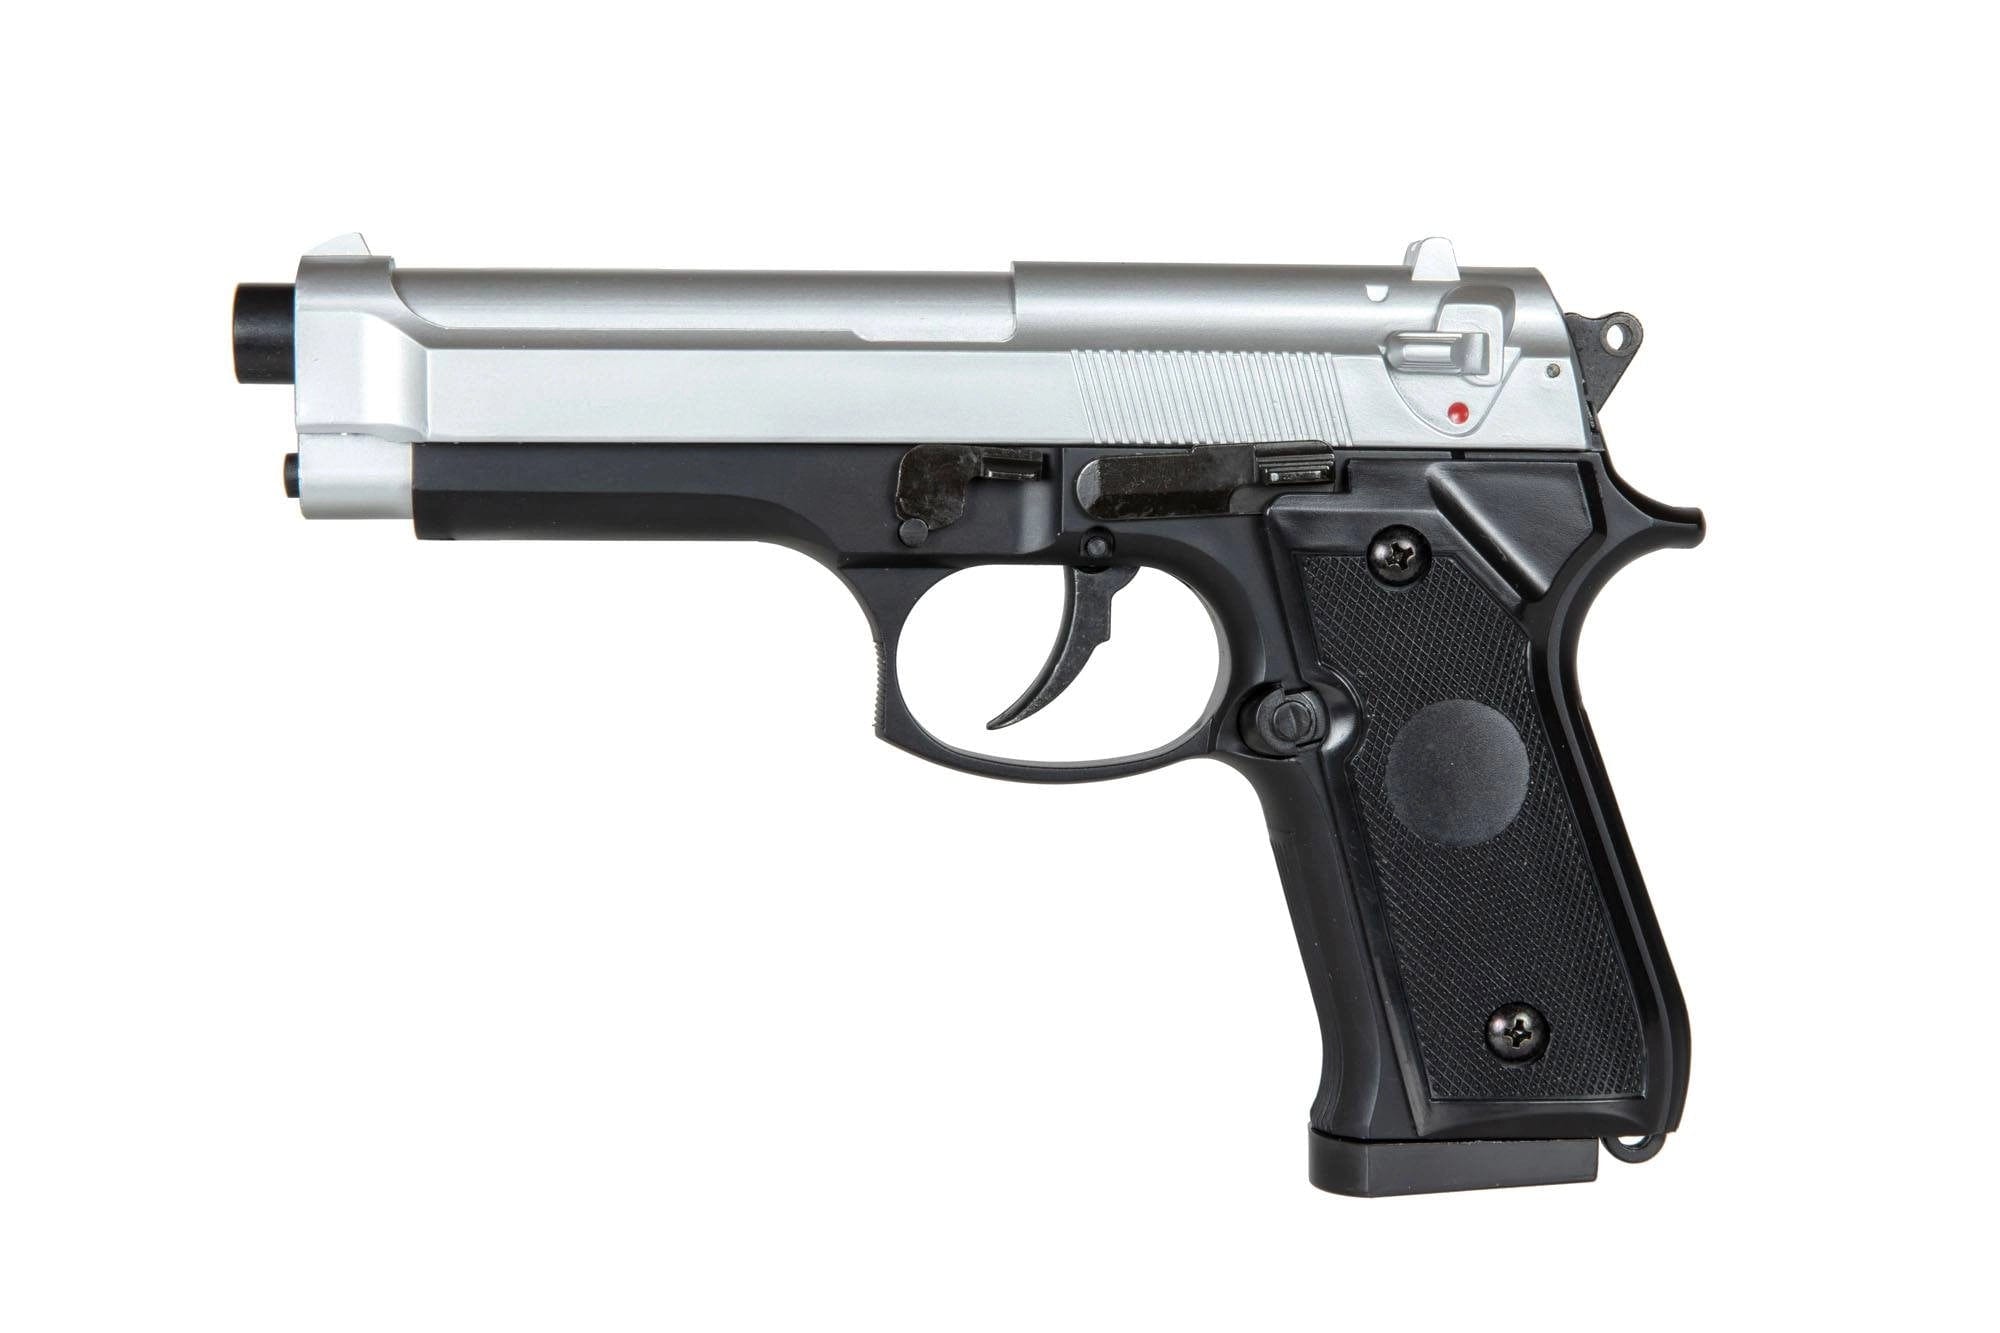 GAH.202 Pistol Replica - Black Silver